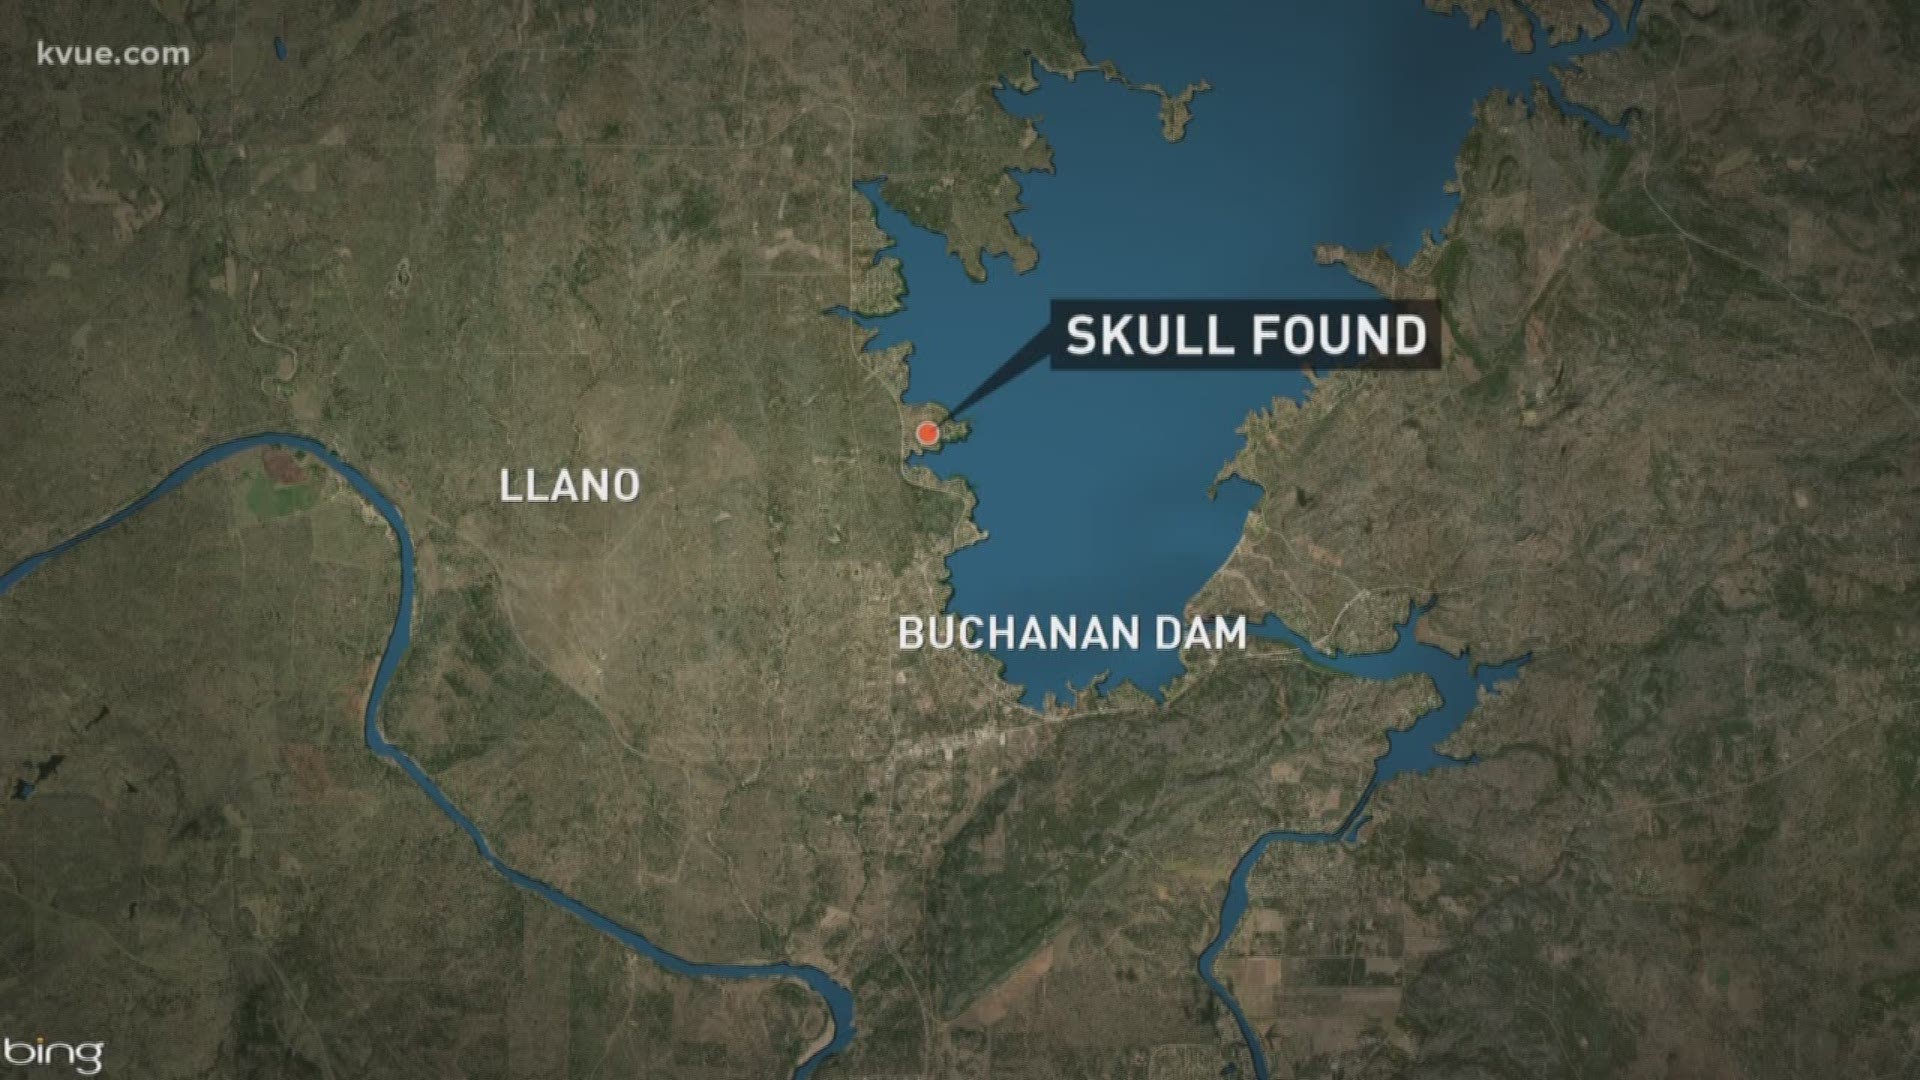 Skull found near Buchanan Dam